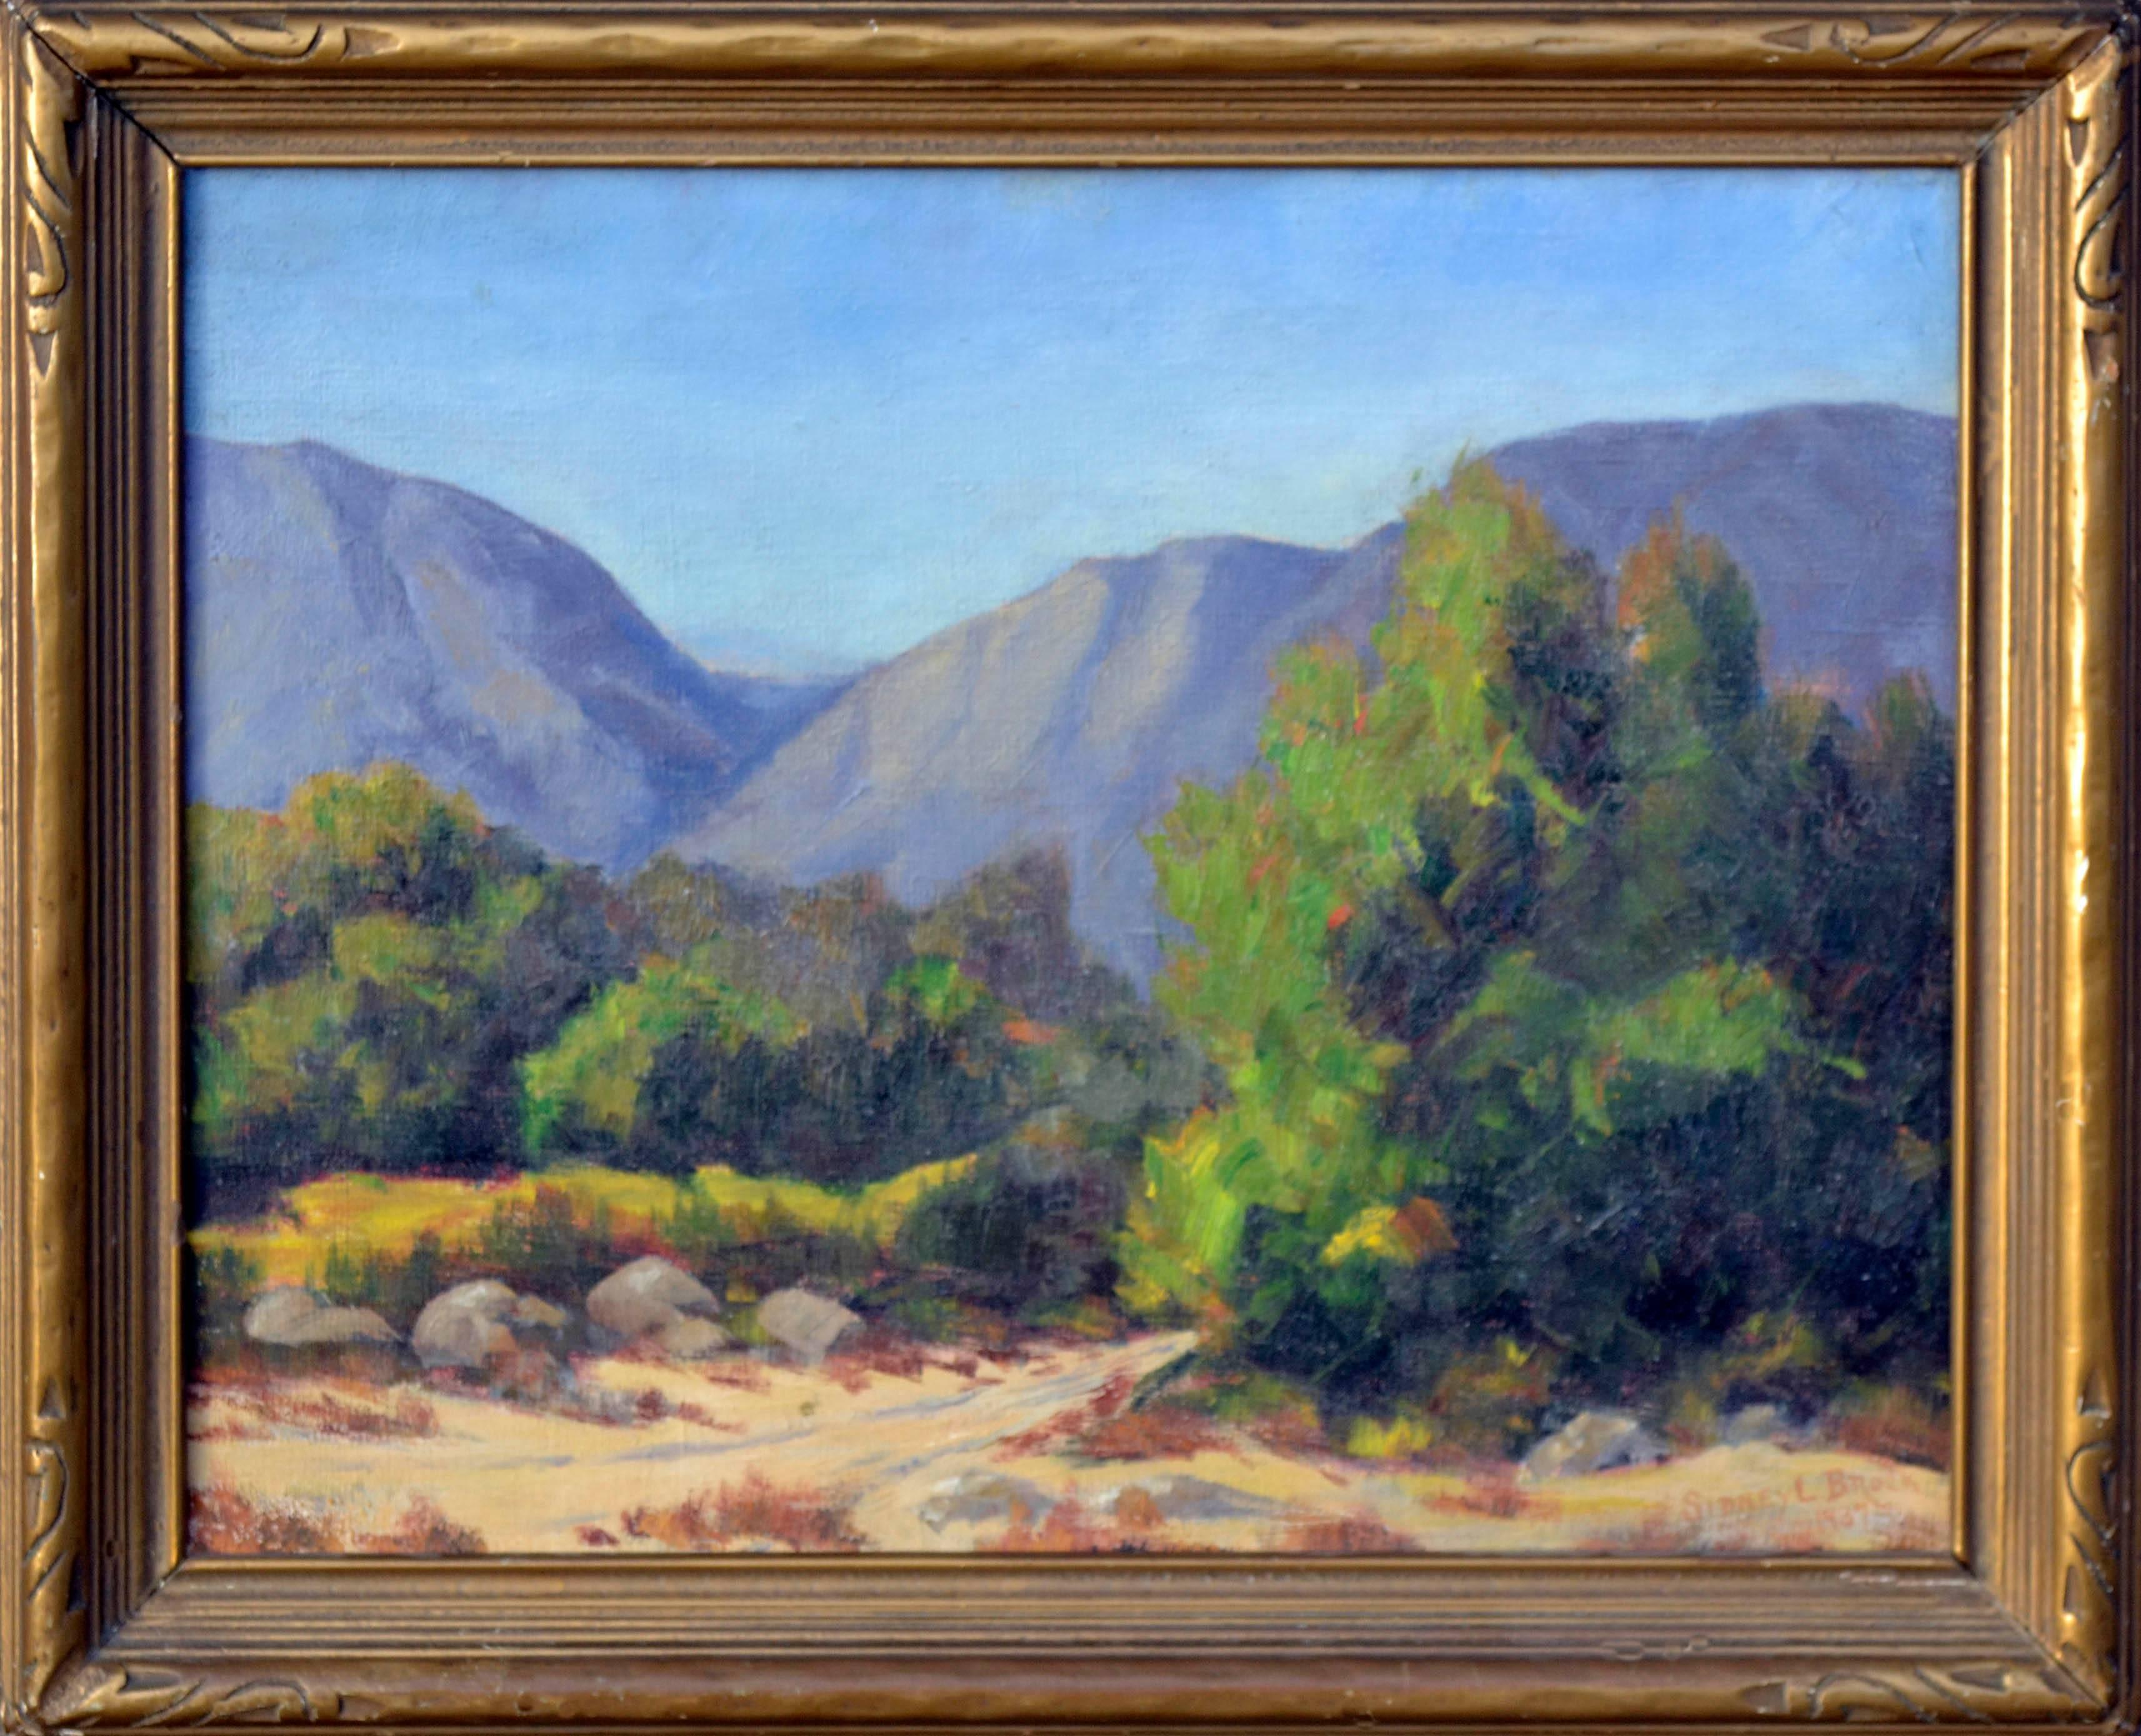 Sidney L. Brock Landscape Painting - 1930's California Mountain Trail Landscape 